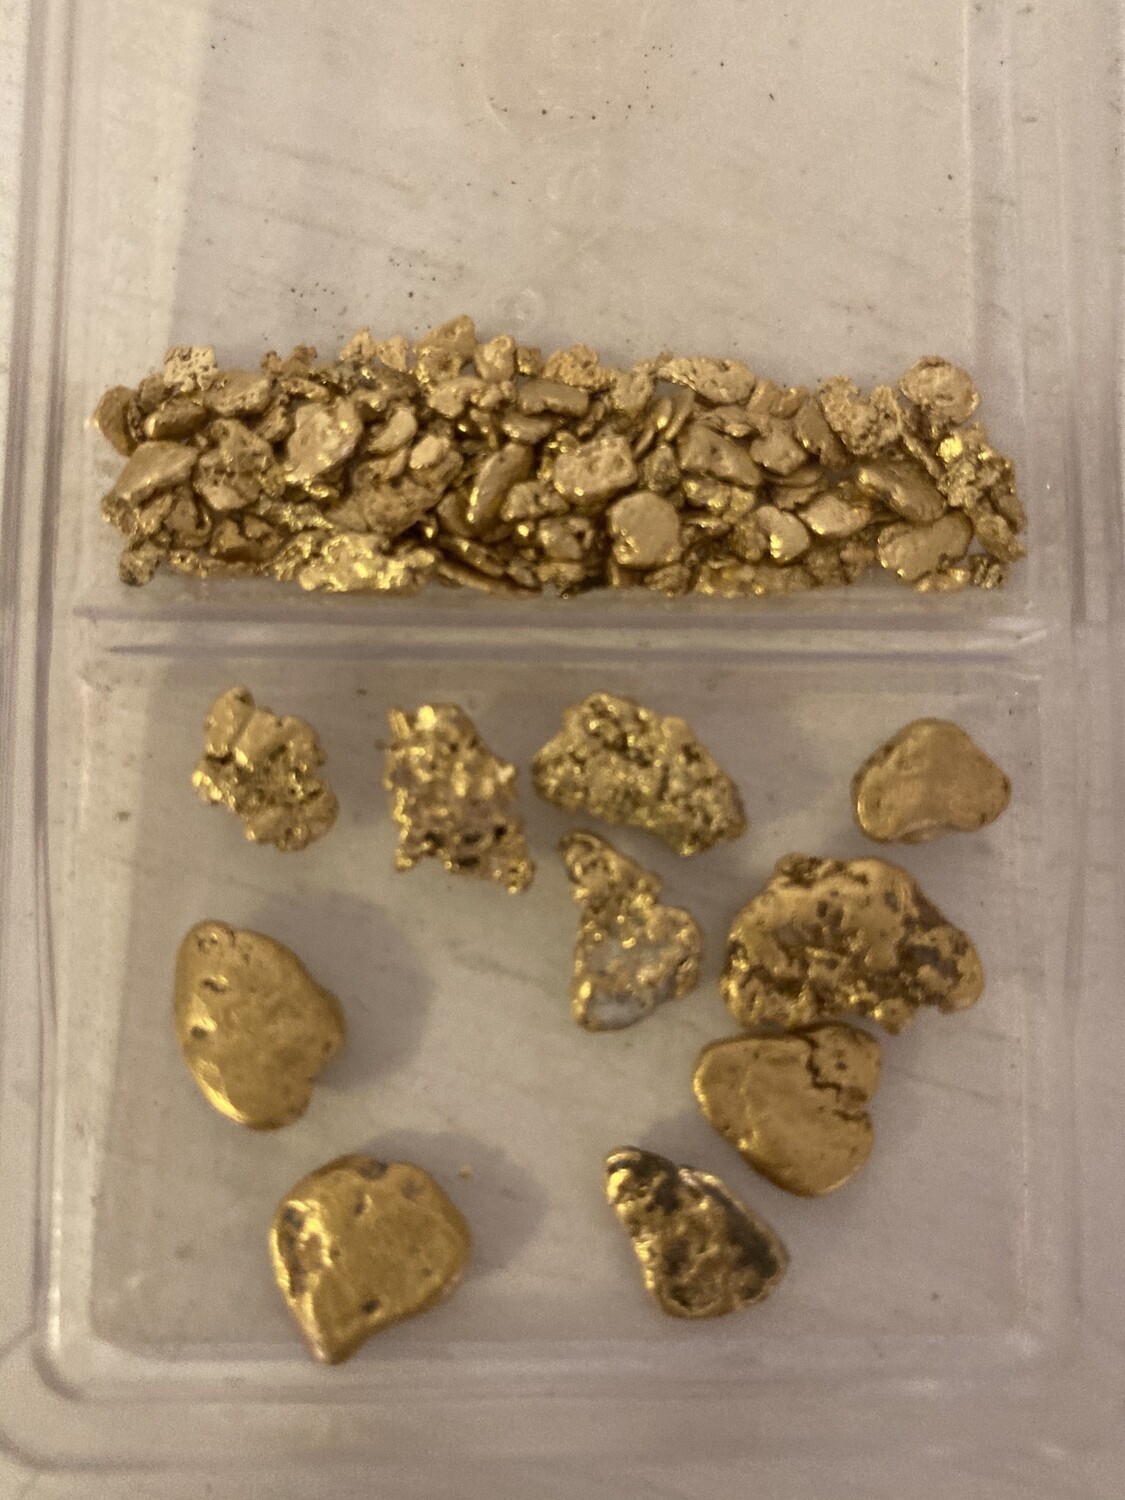 1 gram of raw gold